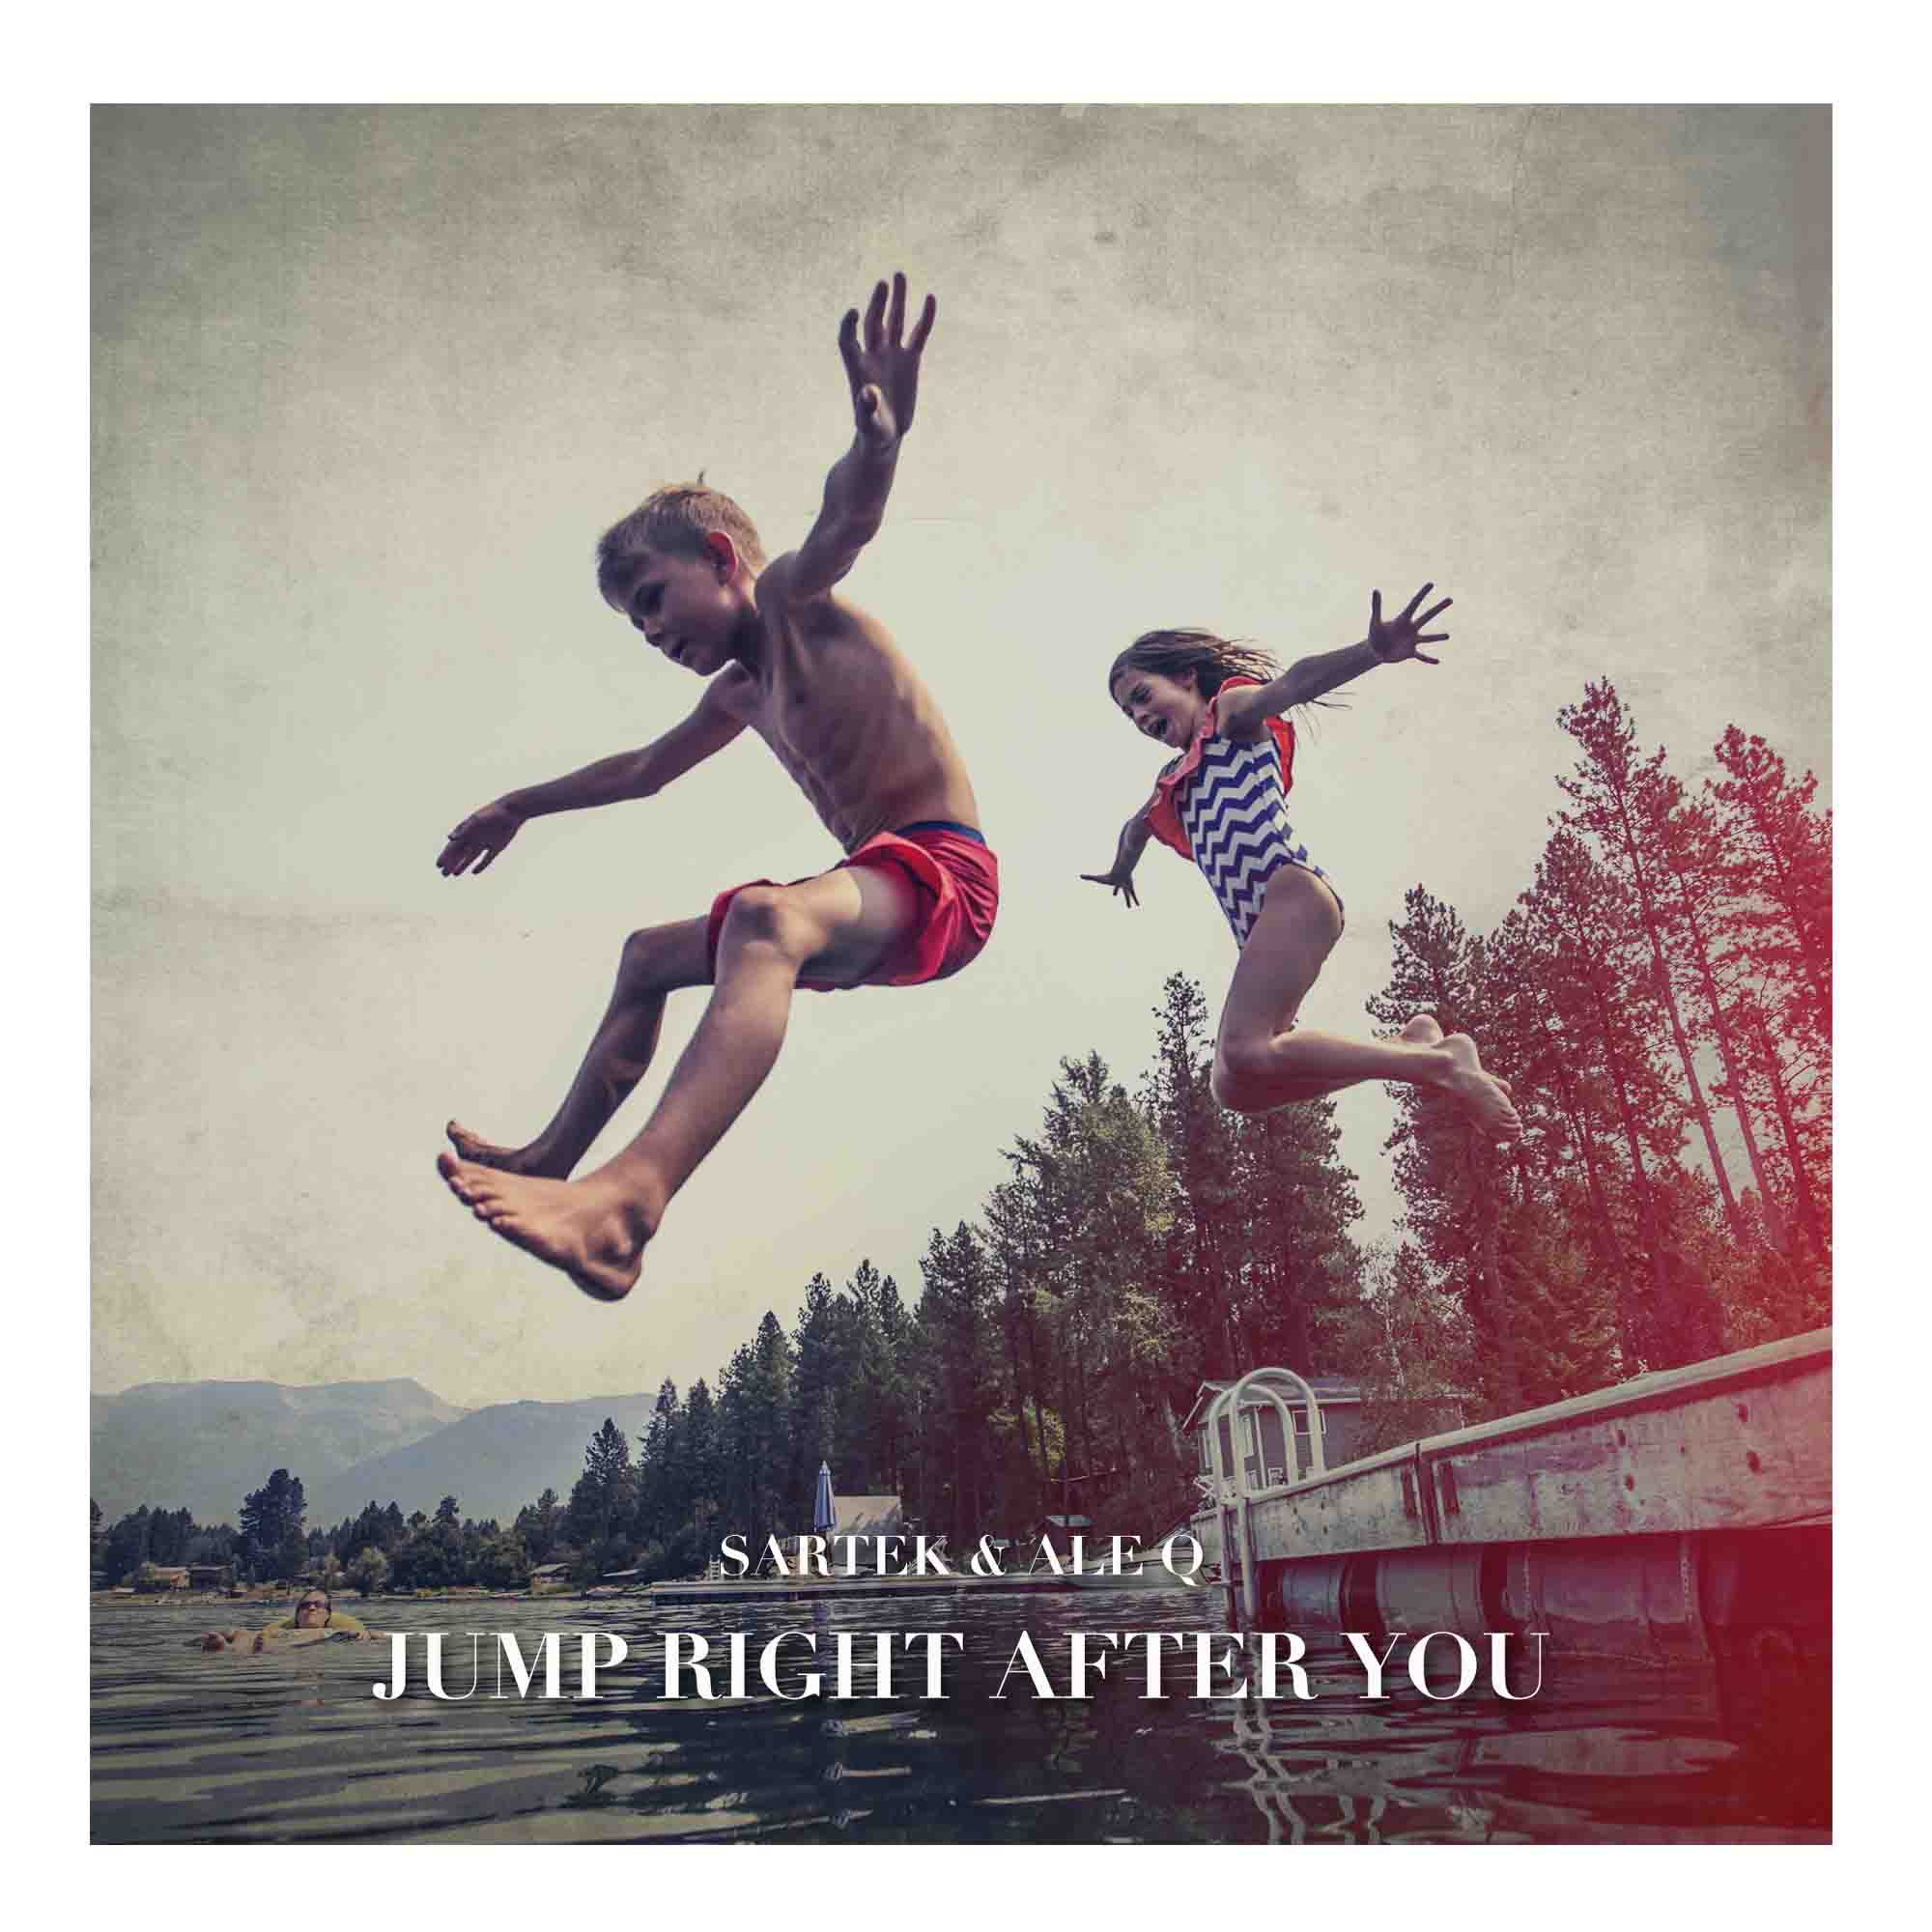 sartek_ale_q_-_jump_right_after_you_cover_artwork.jpg